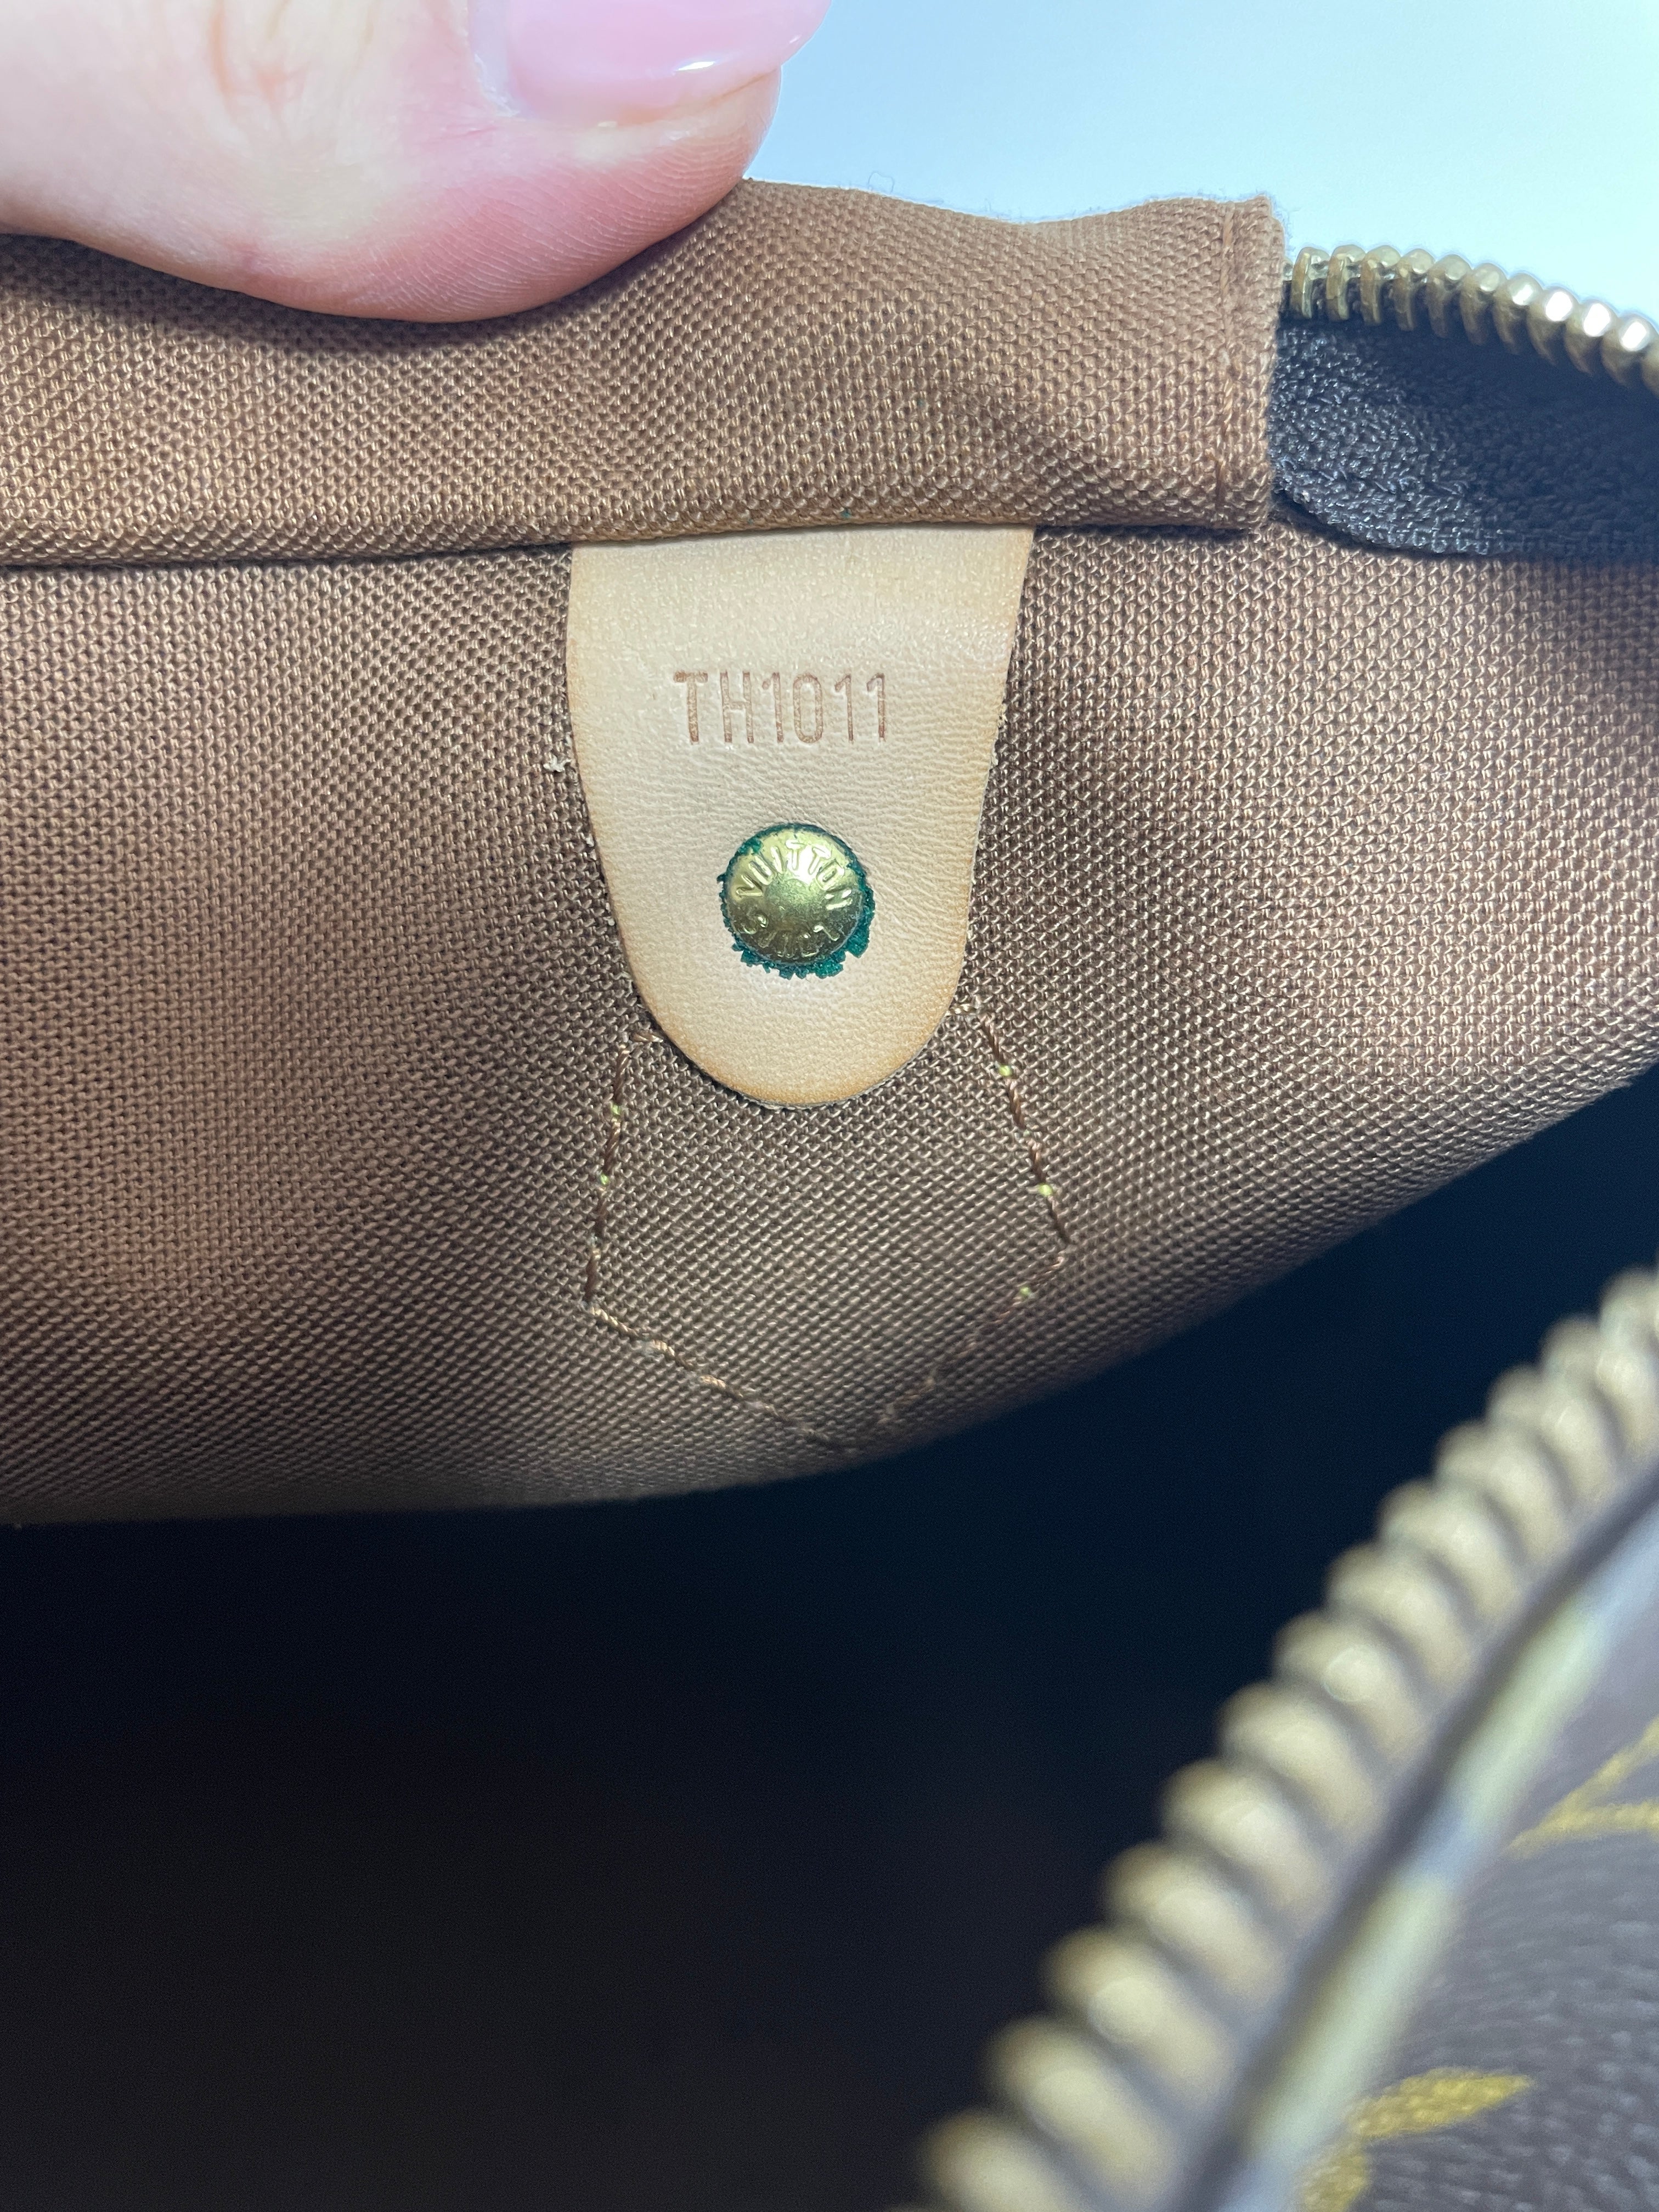 Louis Vuitton Speedy 30 Handbag Used (7626)